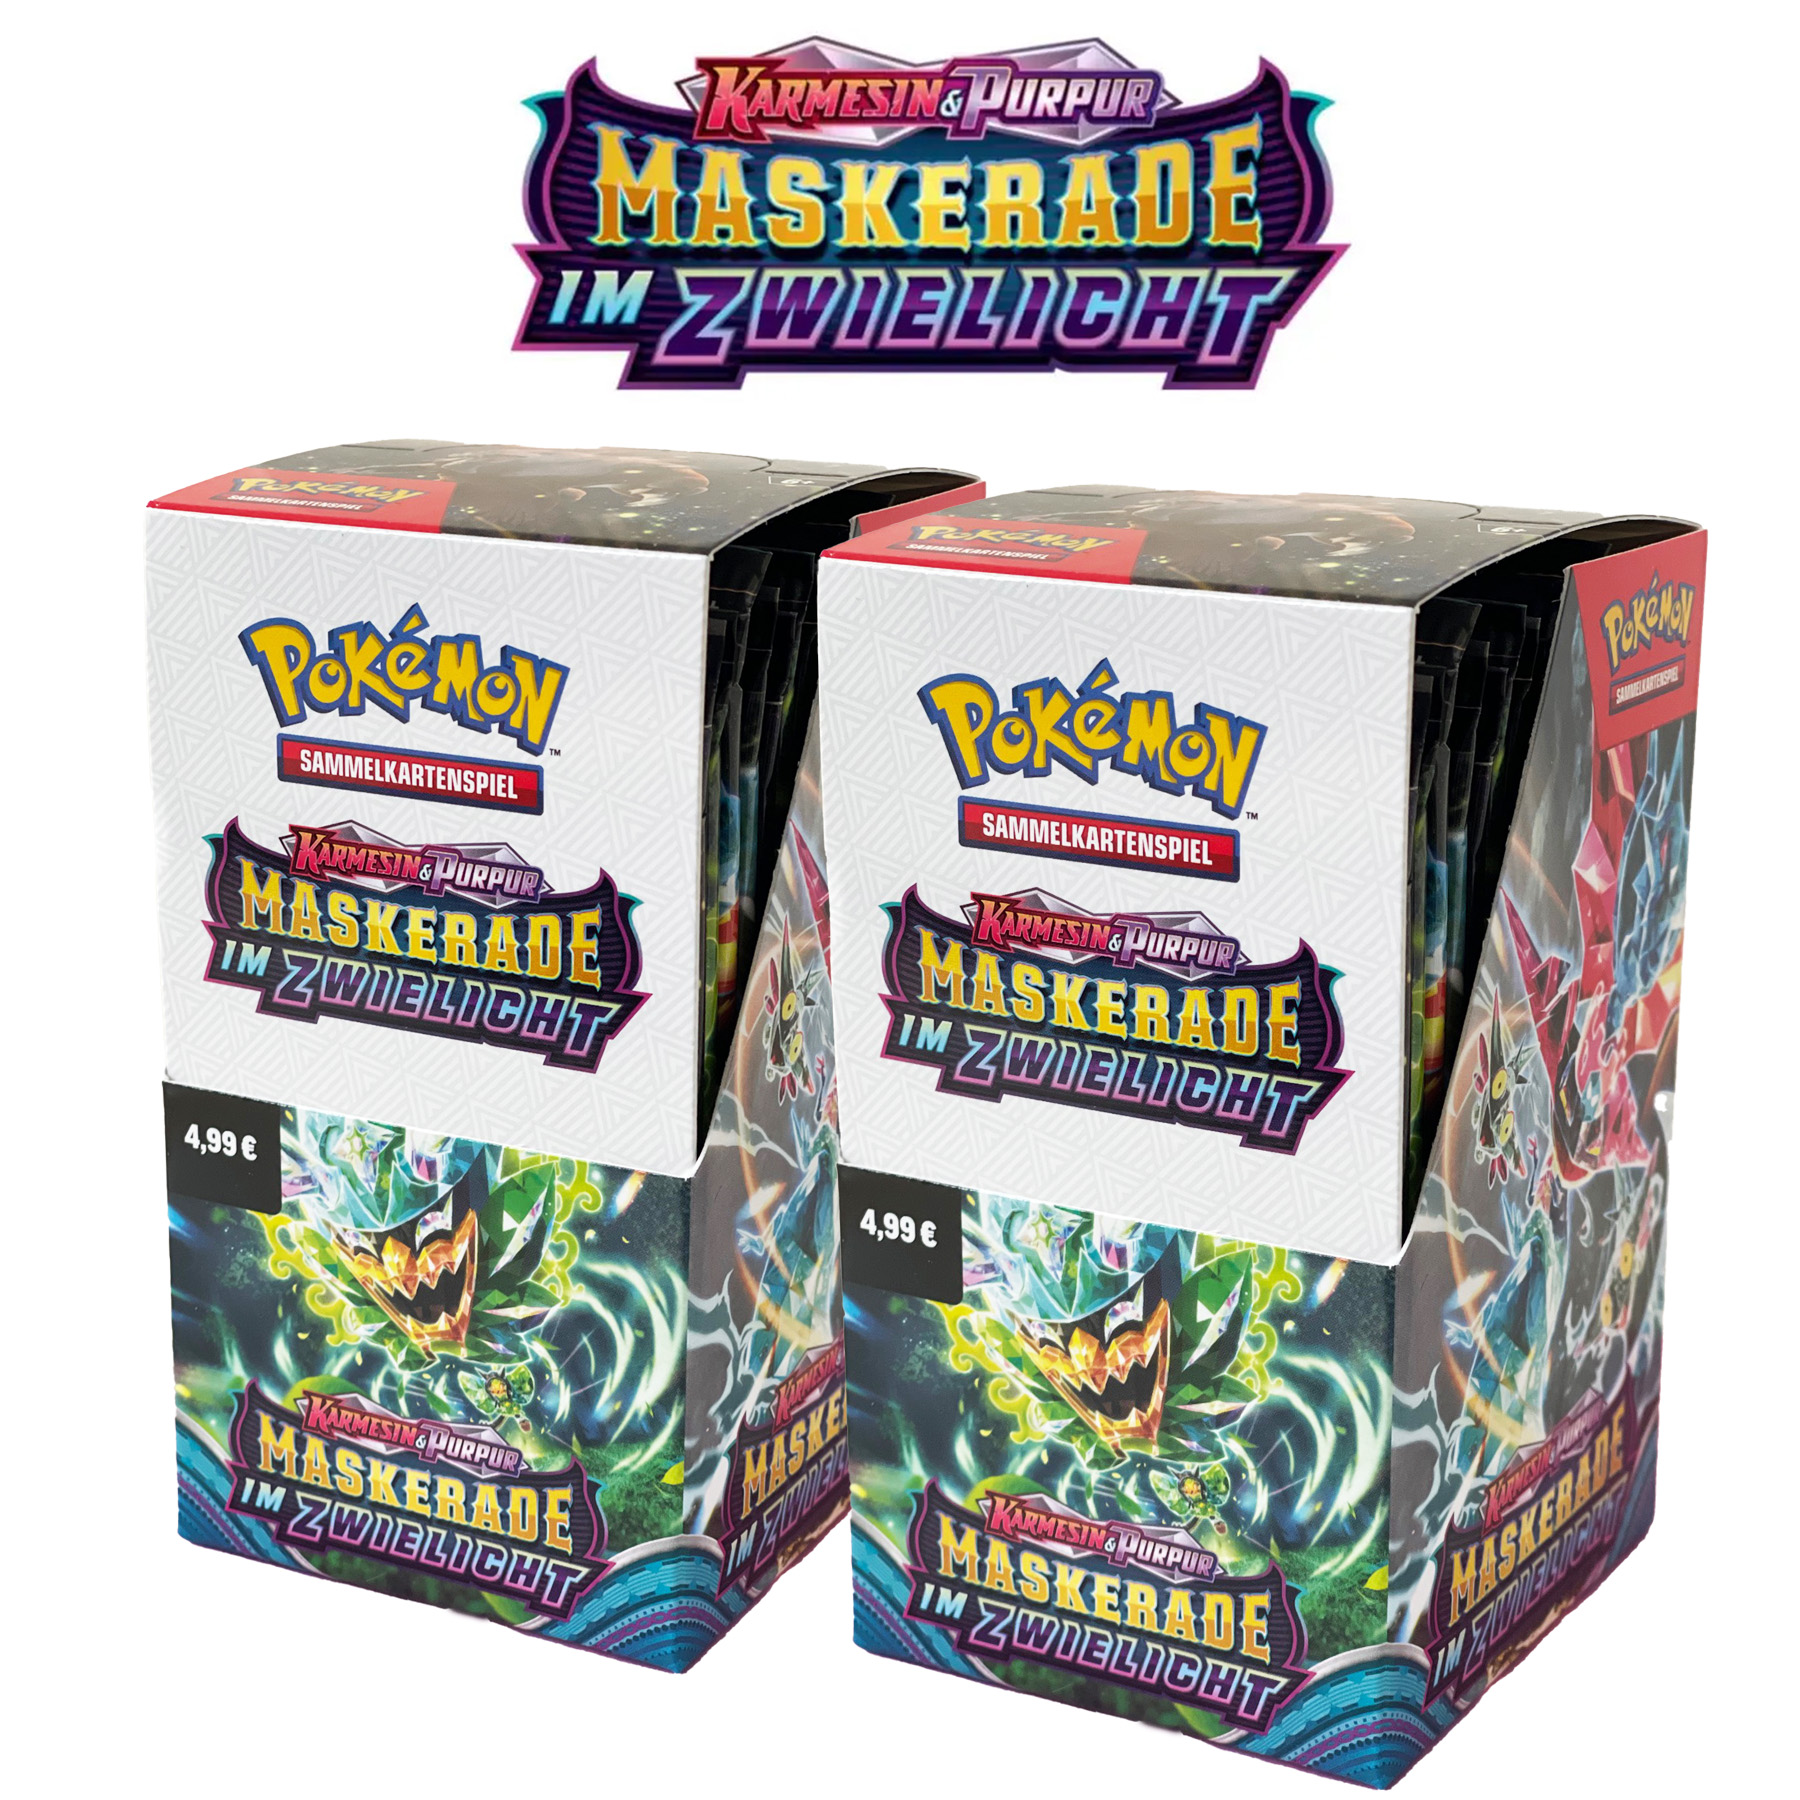 Pokémon Double Bundle "Maskerade im Zwielicht" - 2 Displays mit je 18 Boosterpacks